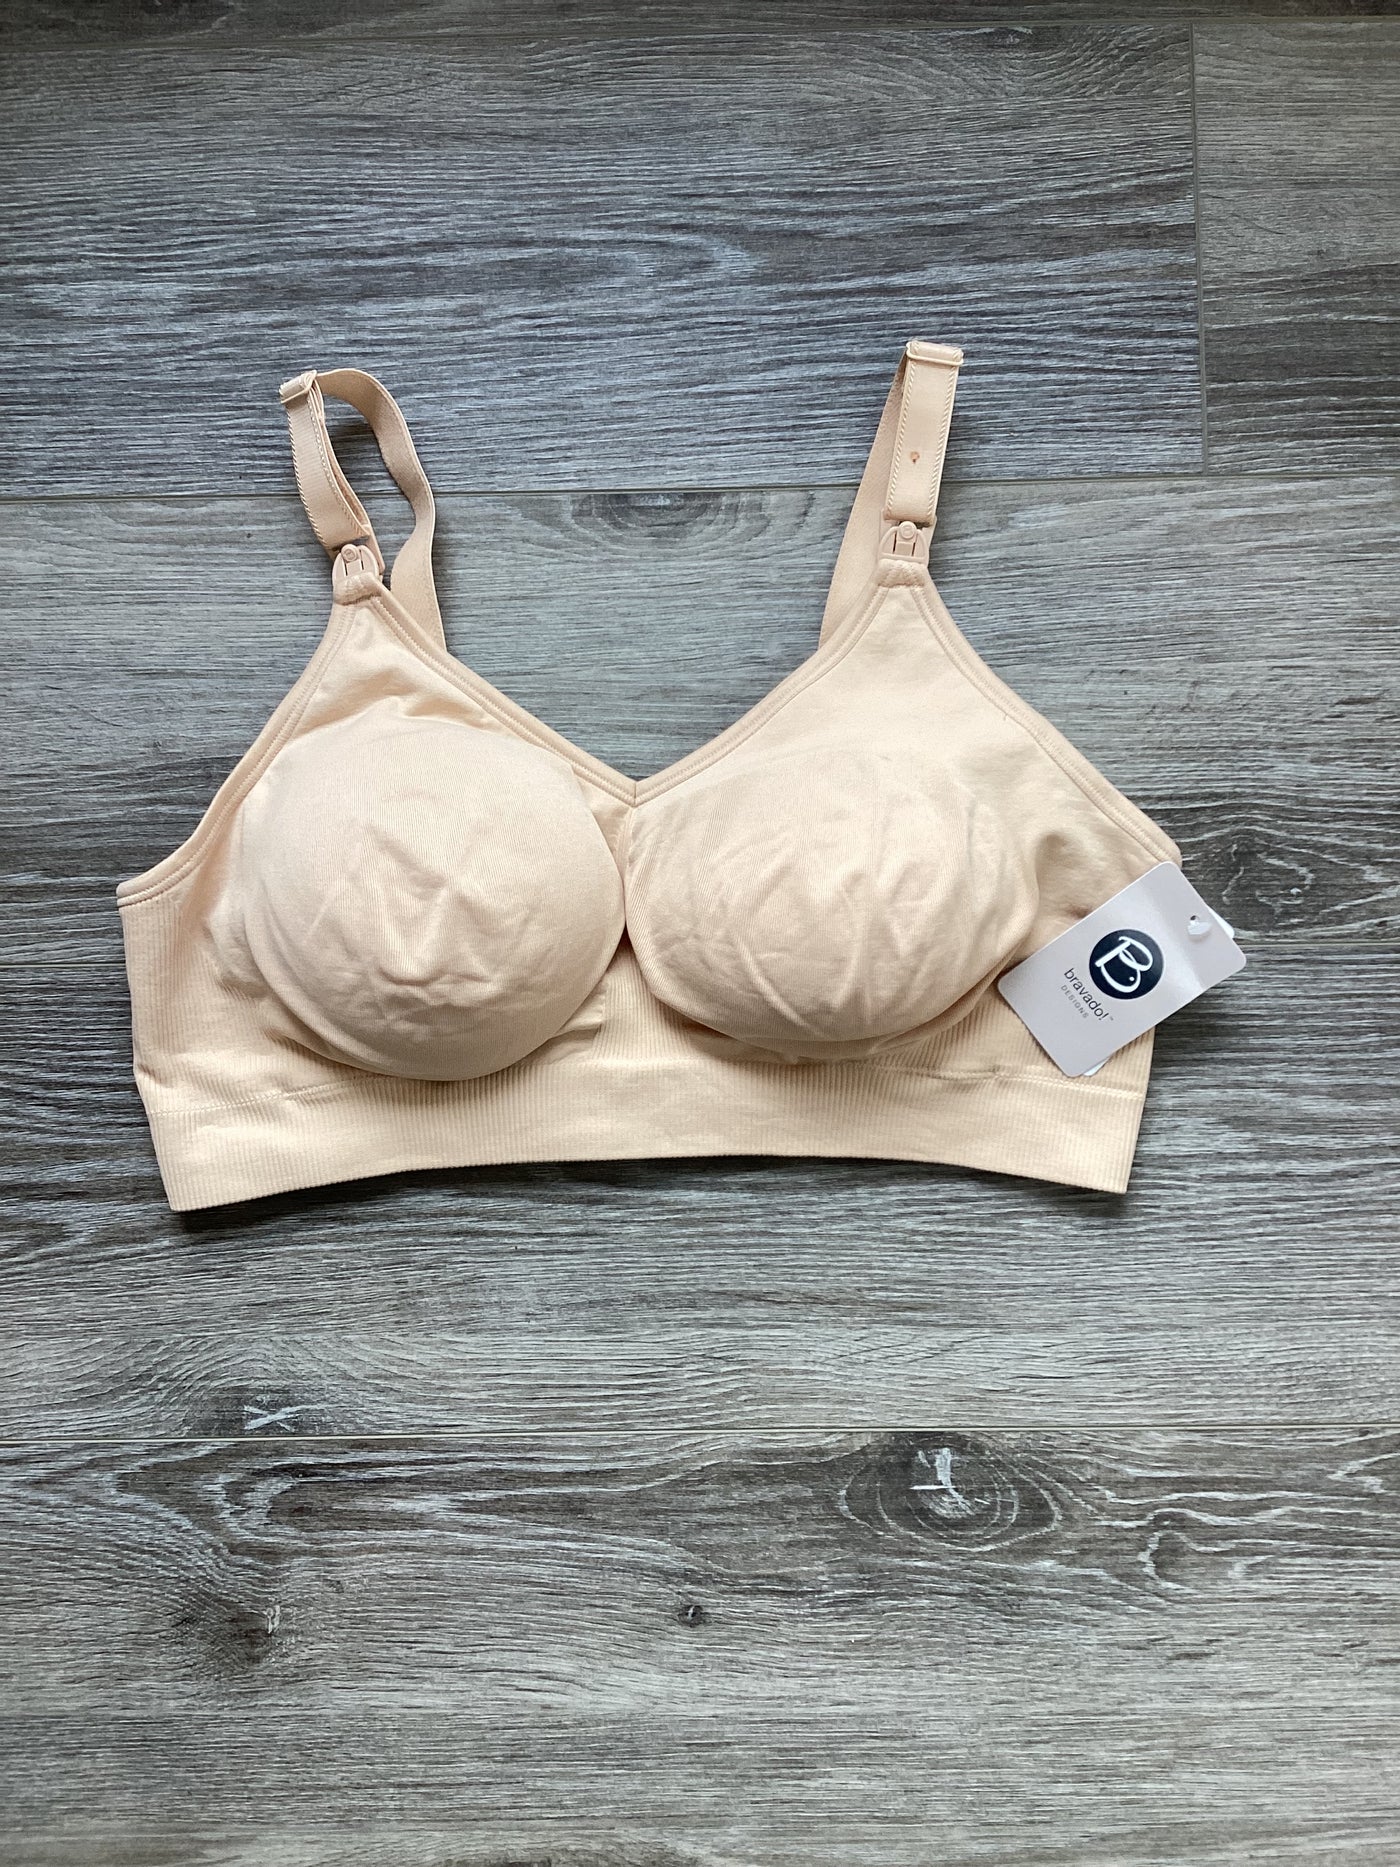 Bravado butterscotch body silk seamless nursing bra (BNWT) - Size XL (Approx UK 16/18)